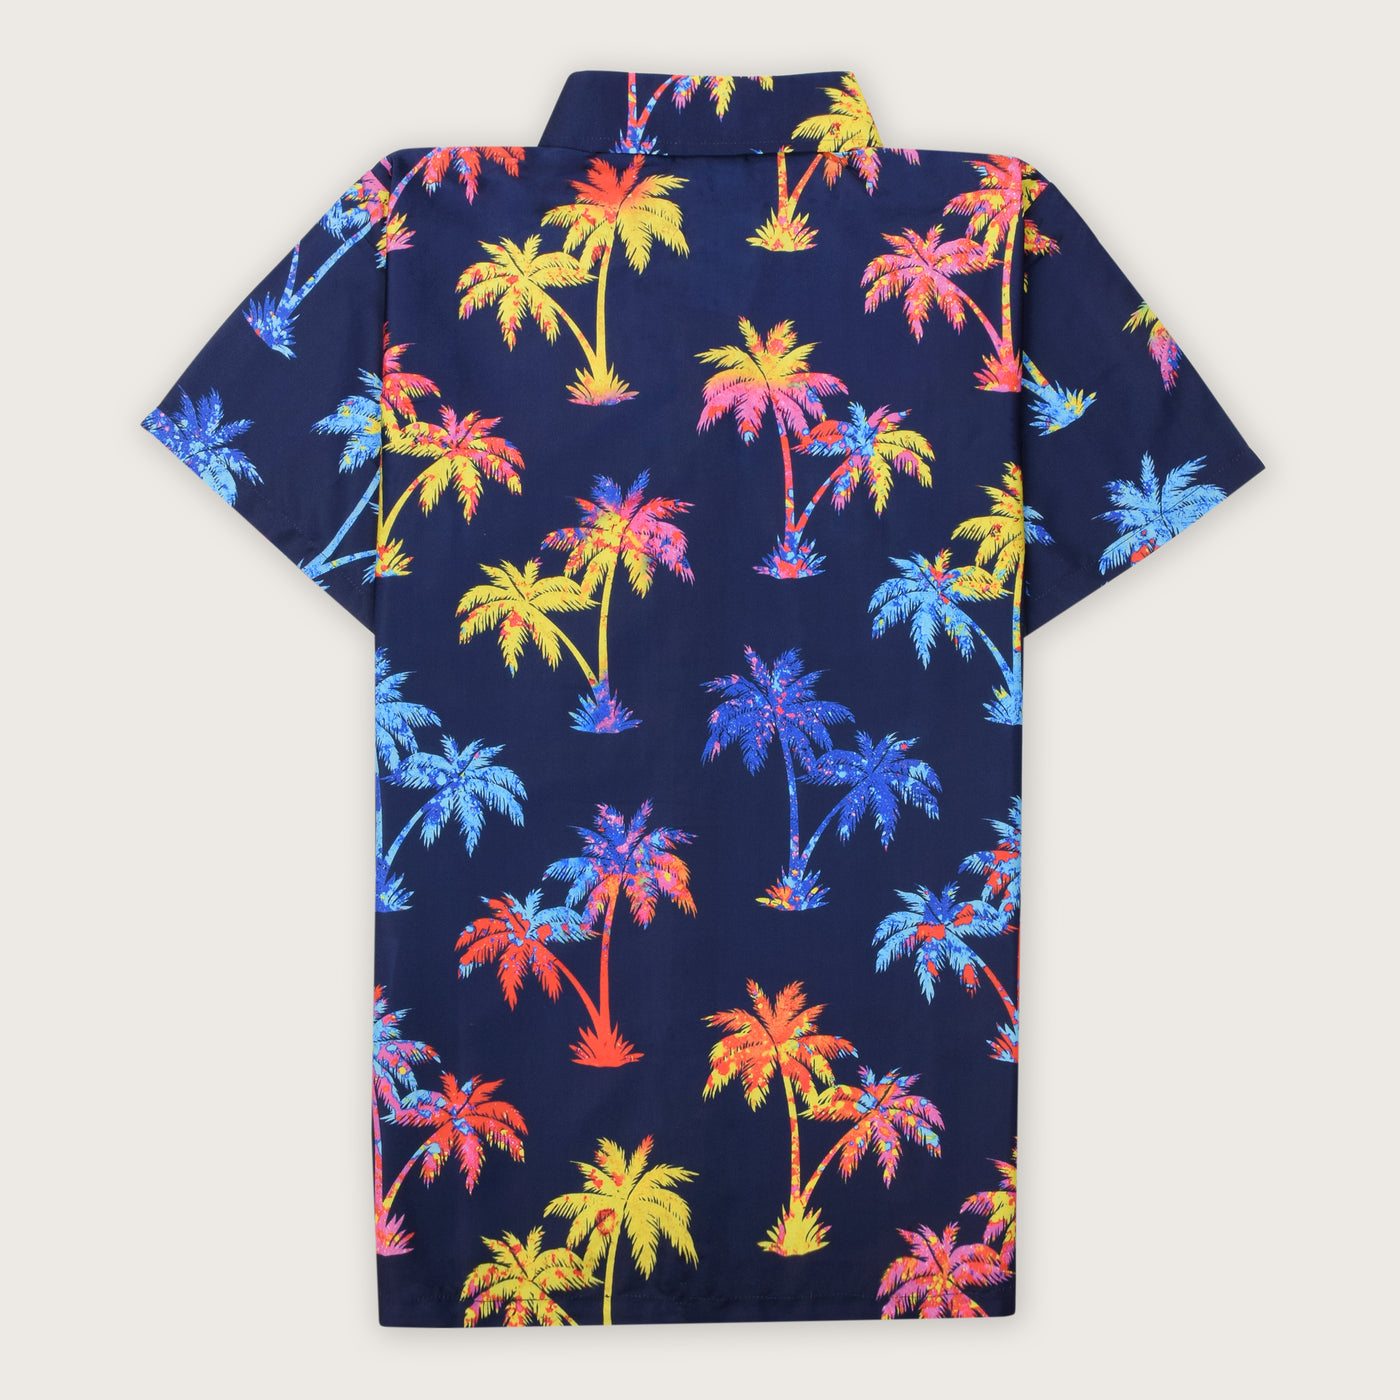 Das bunte Palmen-Shirt